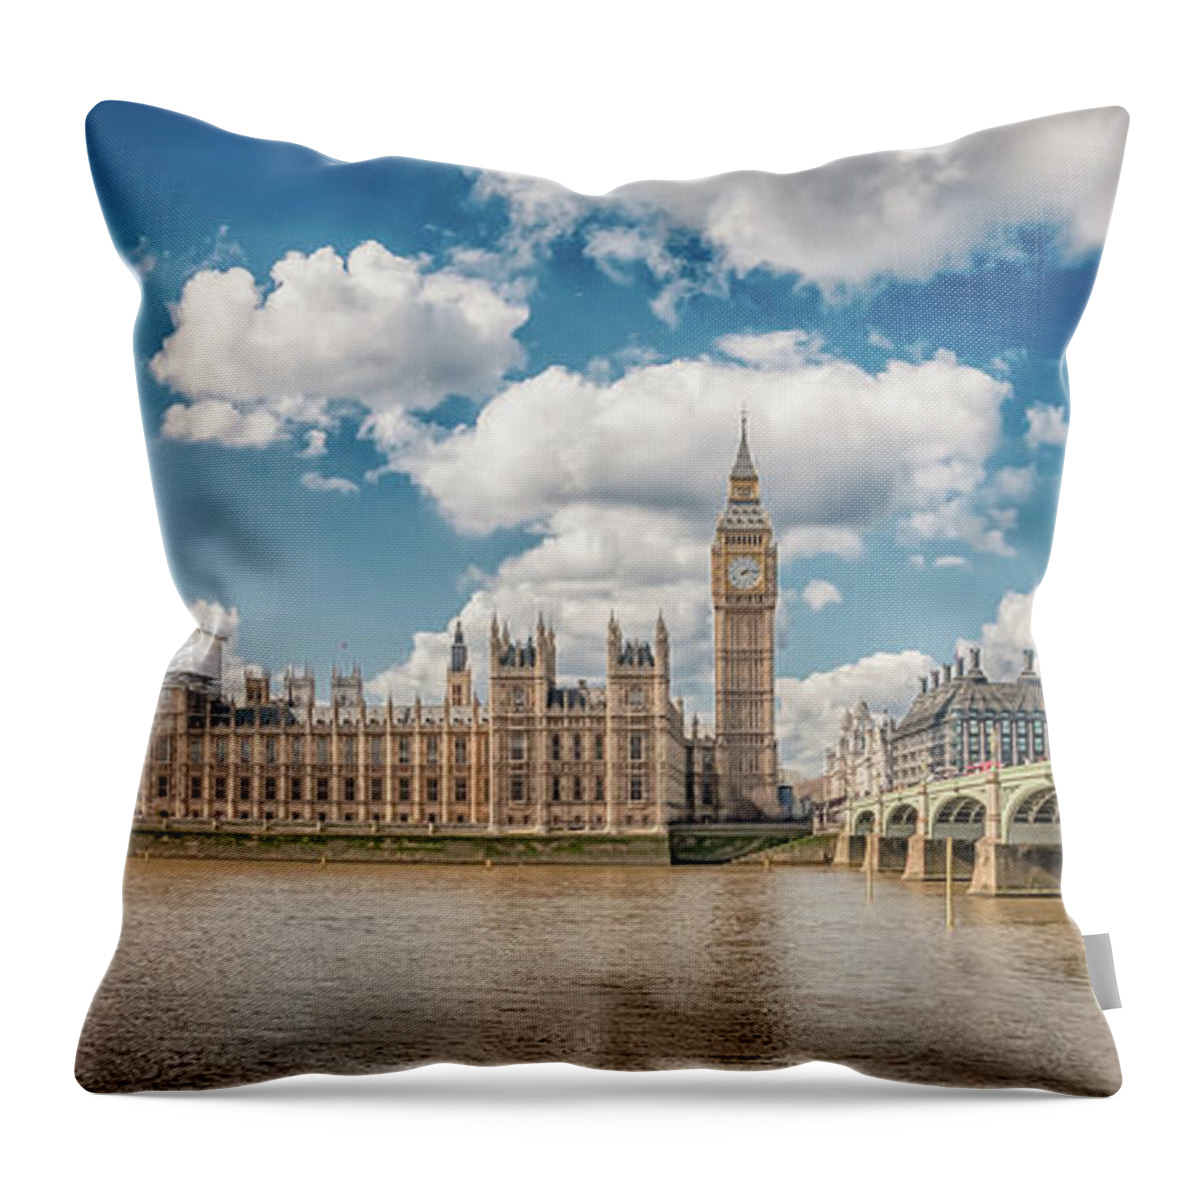 Ben Throw Pillow featuring the photograph Big Ben and Parliament Building #2 by Mariusz Talarek